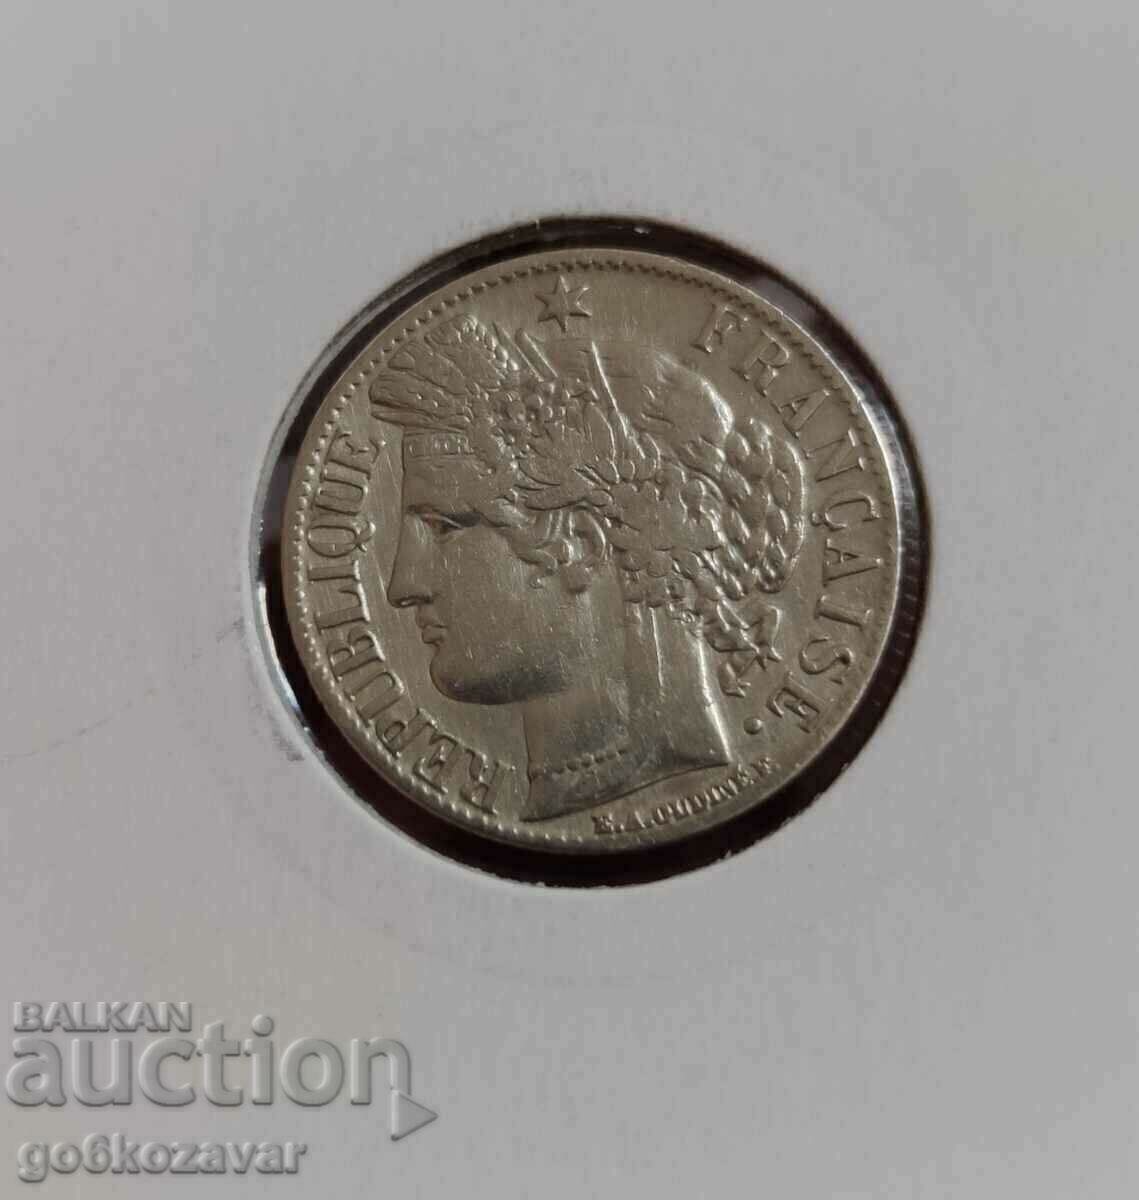 France 1 franc 1871 Silver !